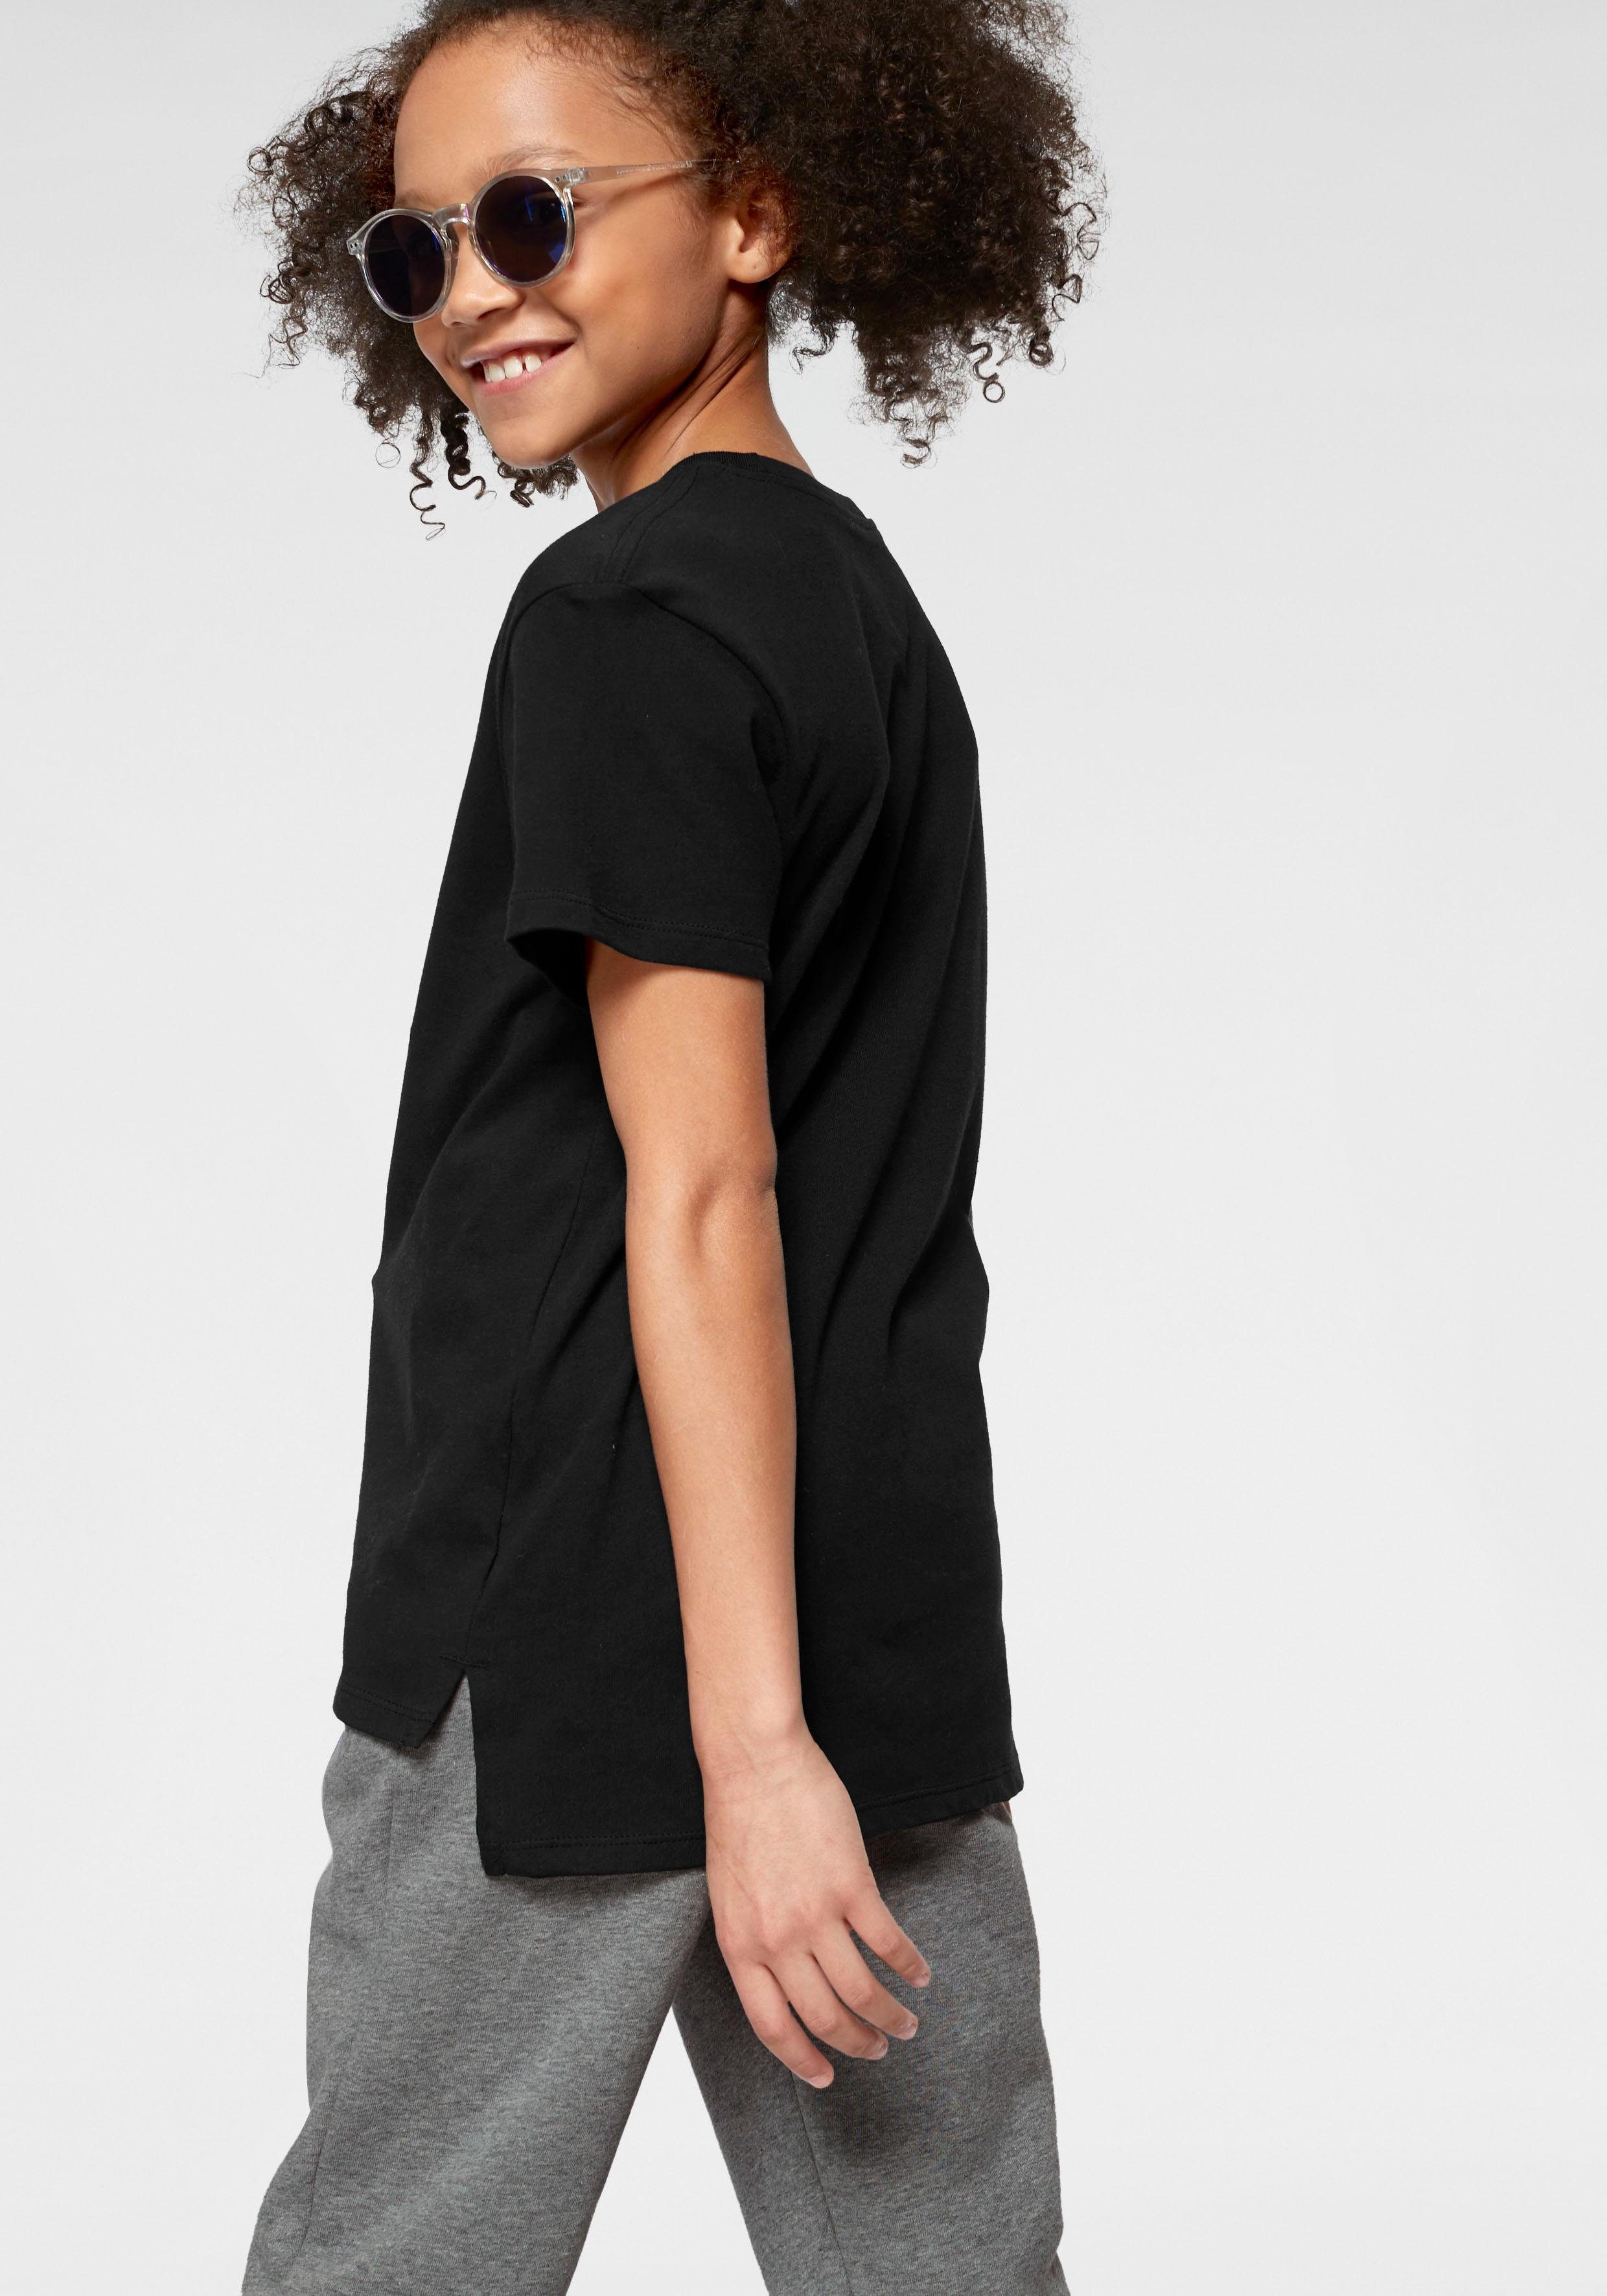 Nike Sportswear T-Shirt Big T-Shirt schwarz Kids'